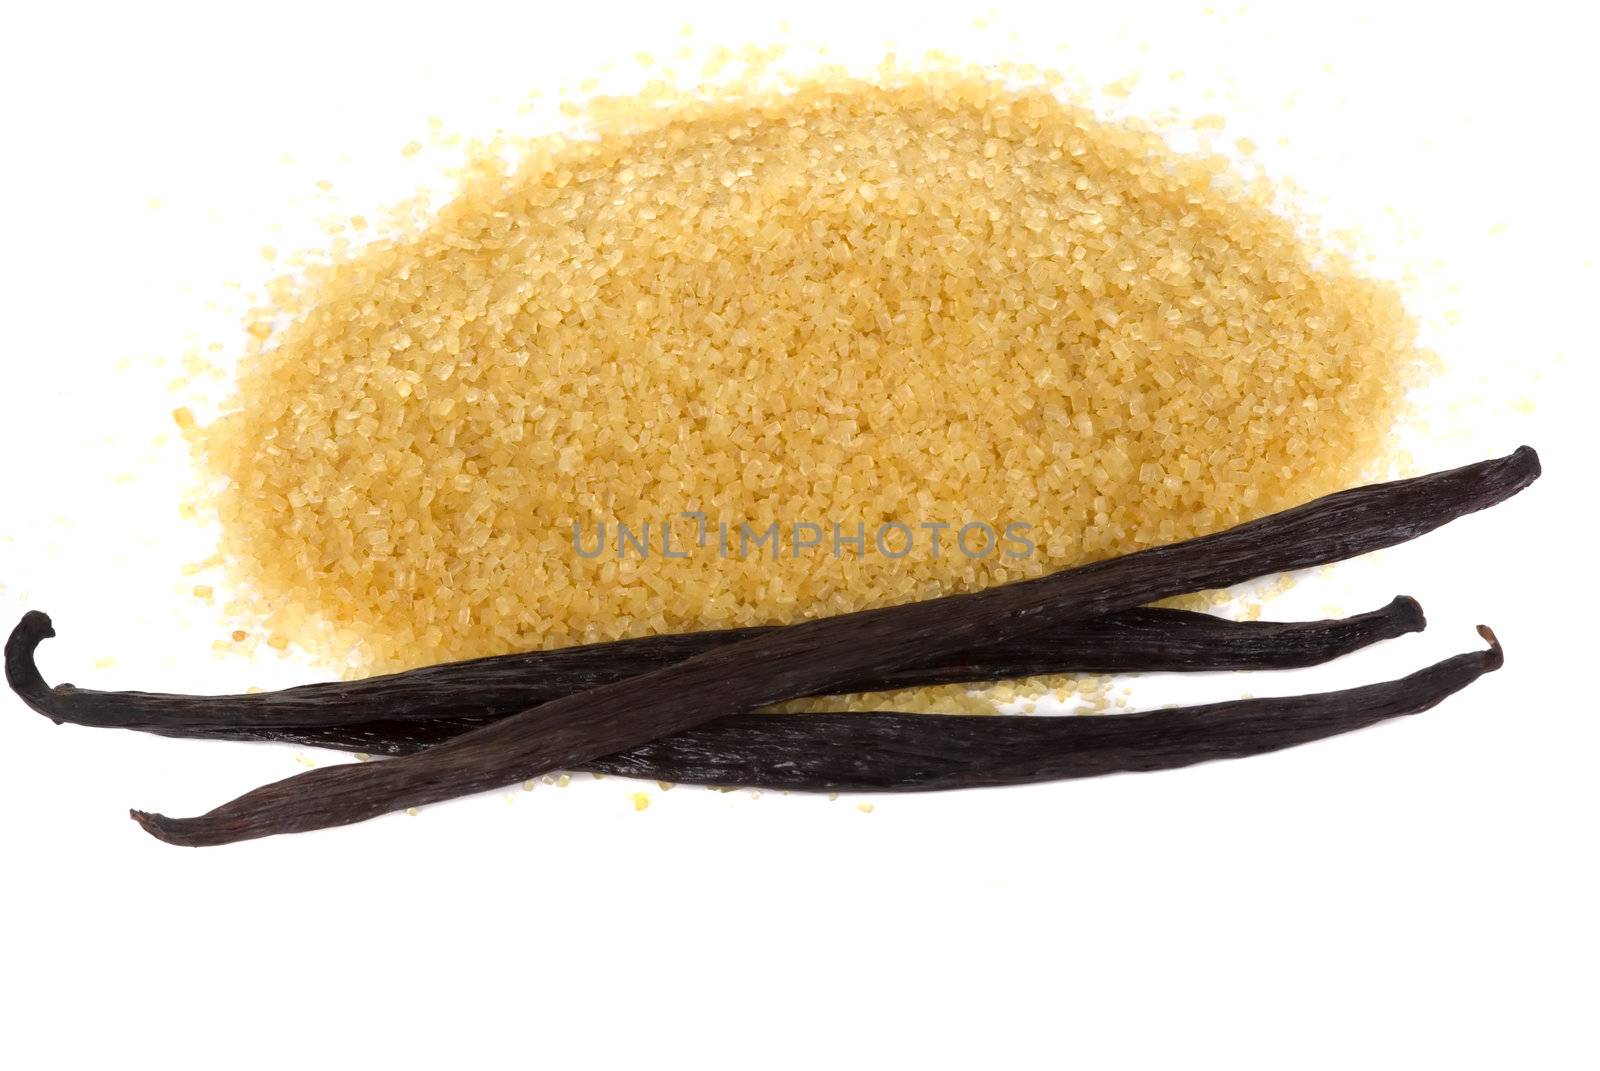 Aromatic vanilla beans and organic raw sugar